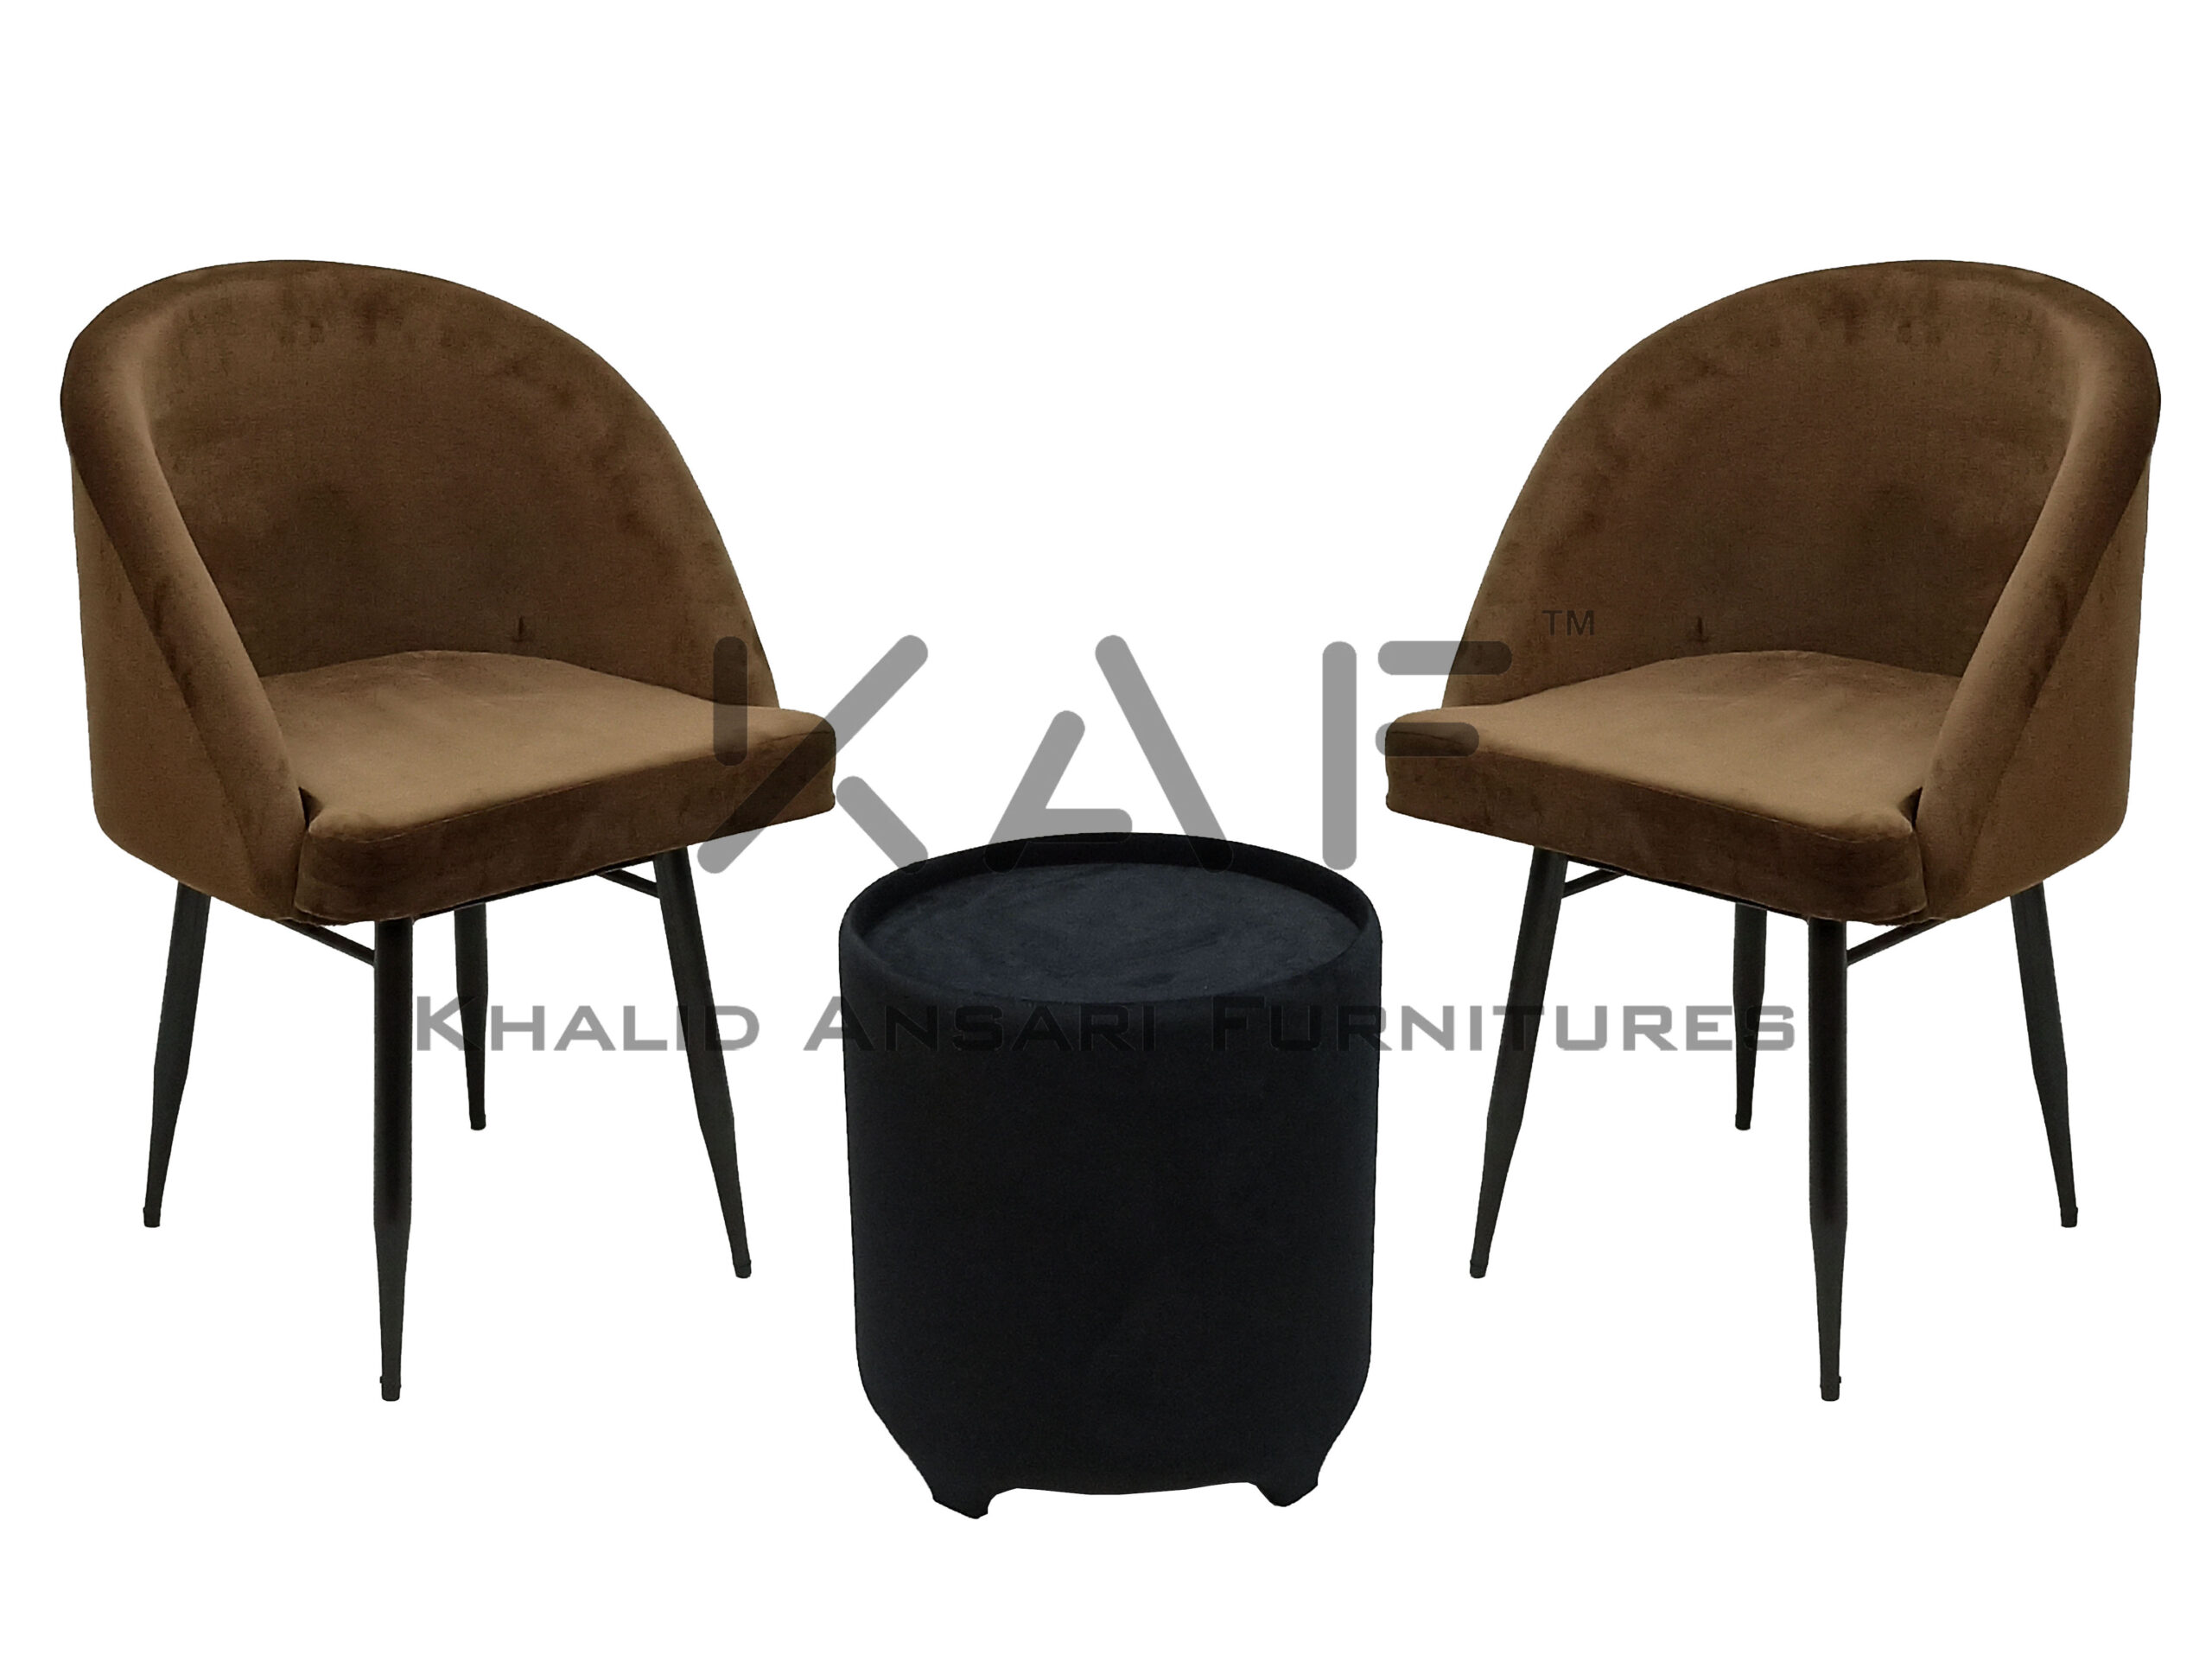 Bed Room Premium Chair Slope Arm Design Camel Brown Velvet set with Black Velvet Tea Table - 2 Chairs + 1 Table